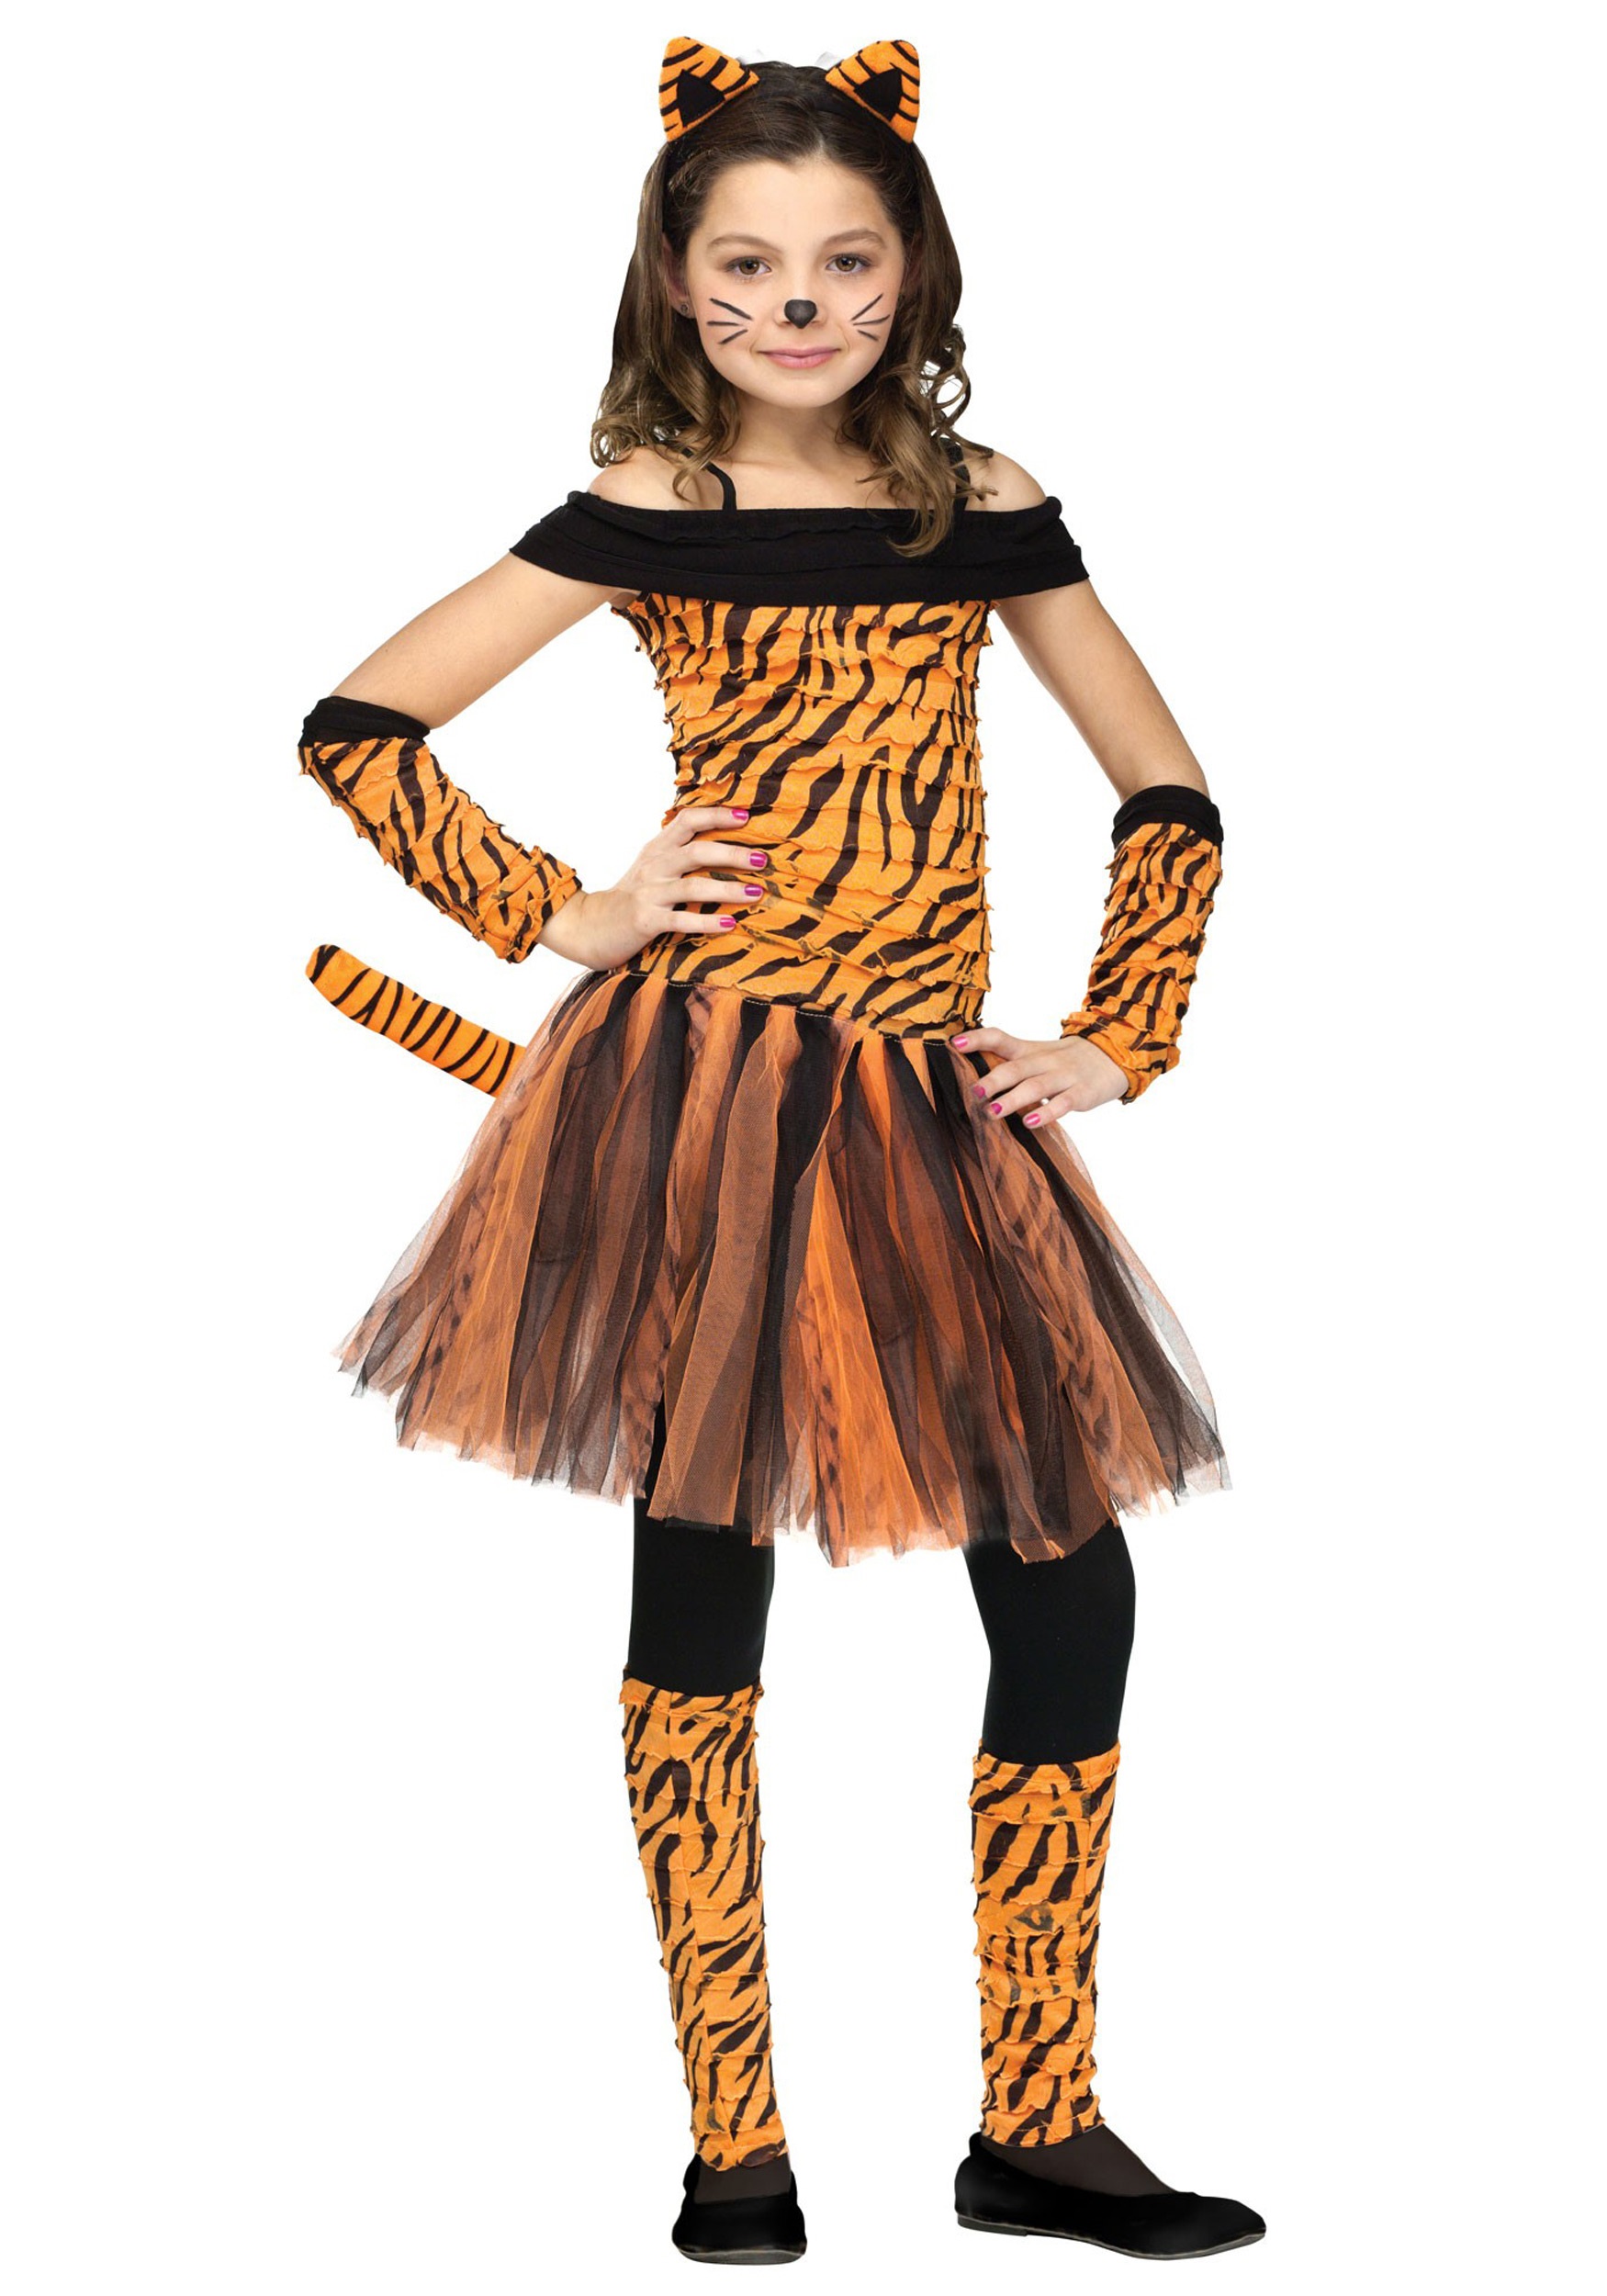 Photos - Fancy Dress Fun World Tigress Girls Costume Black/Orange FU118062